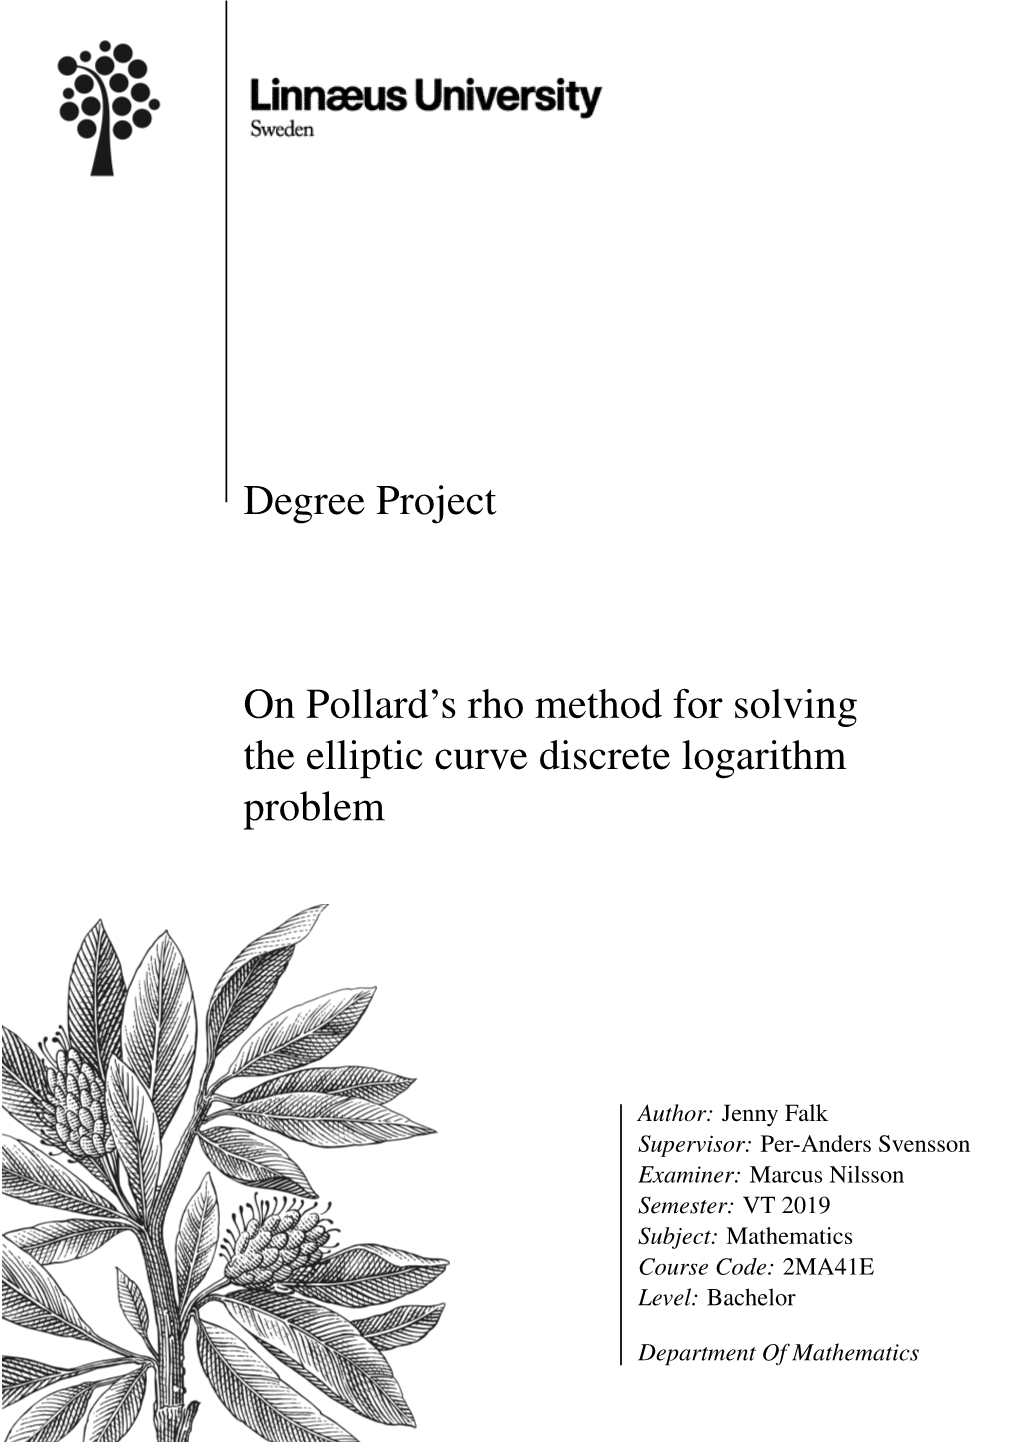 Degree Project on Pollard's Rho Method for Solving the Elliptic Curve Discrete Logarithm Problem